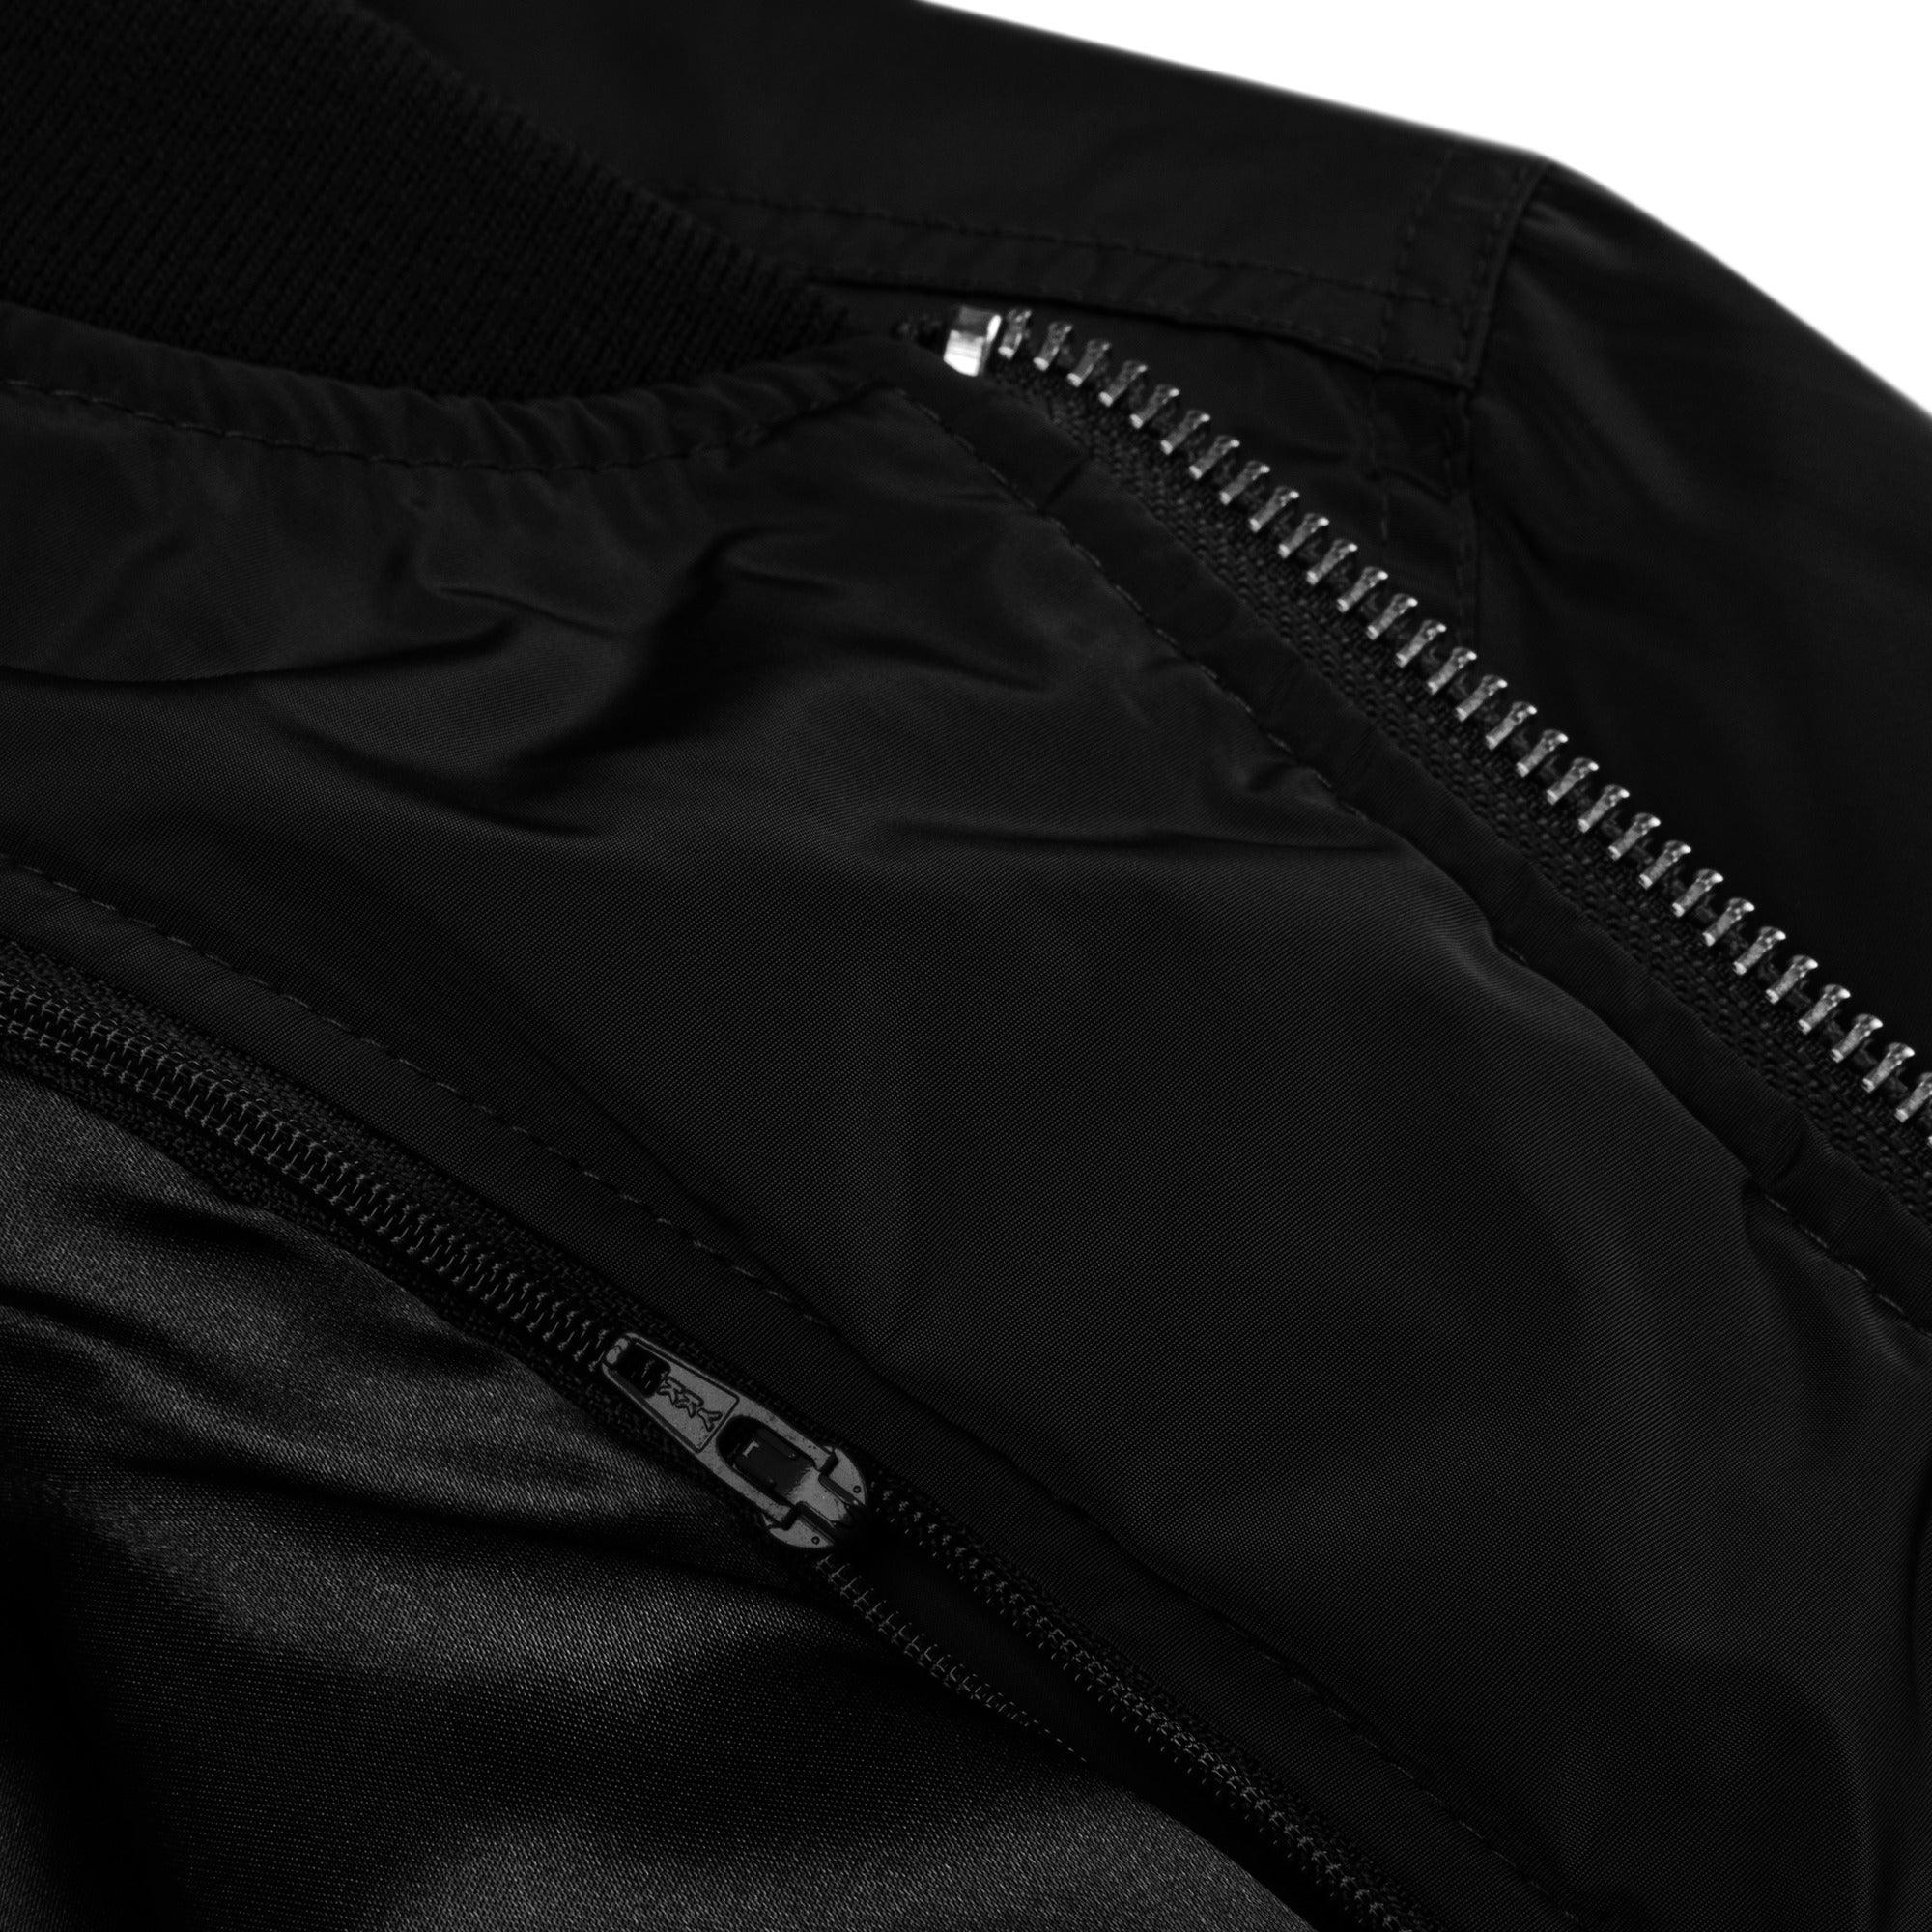 GEARTA - High-quality eco-friendly bomber jacket